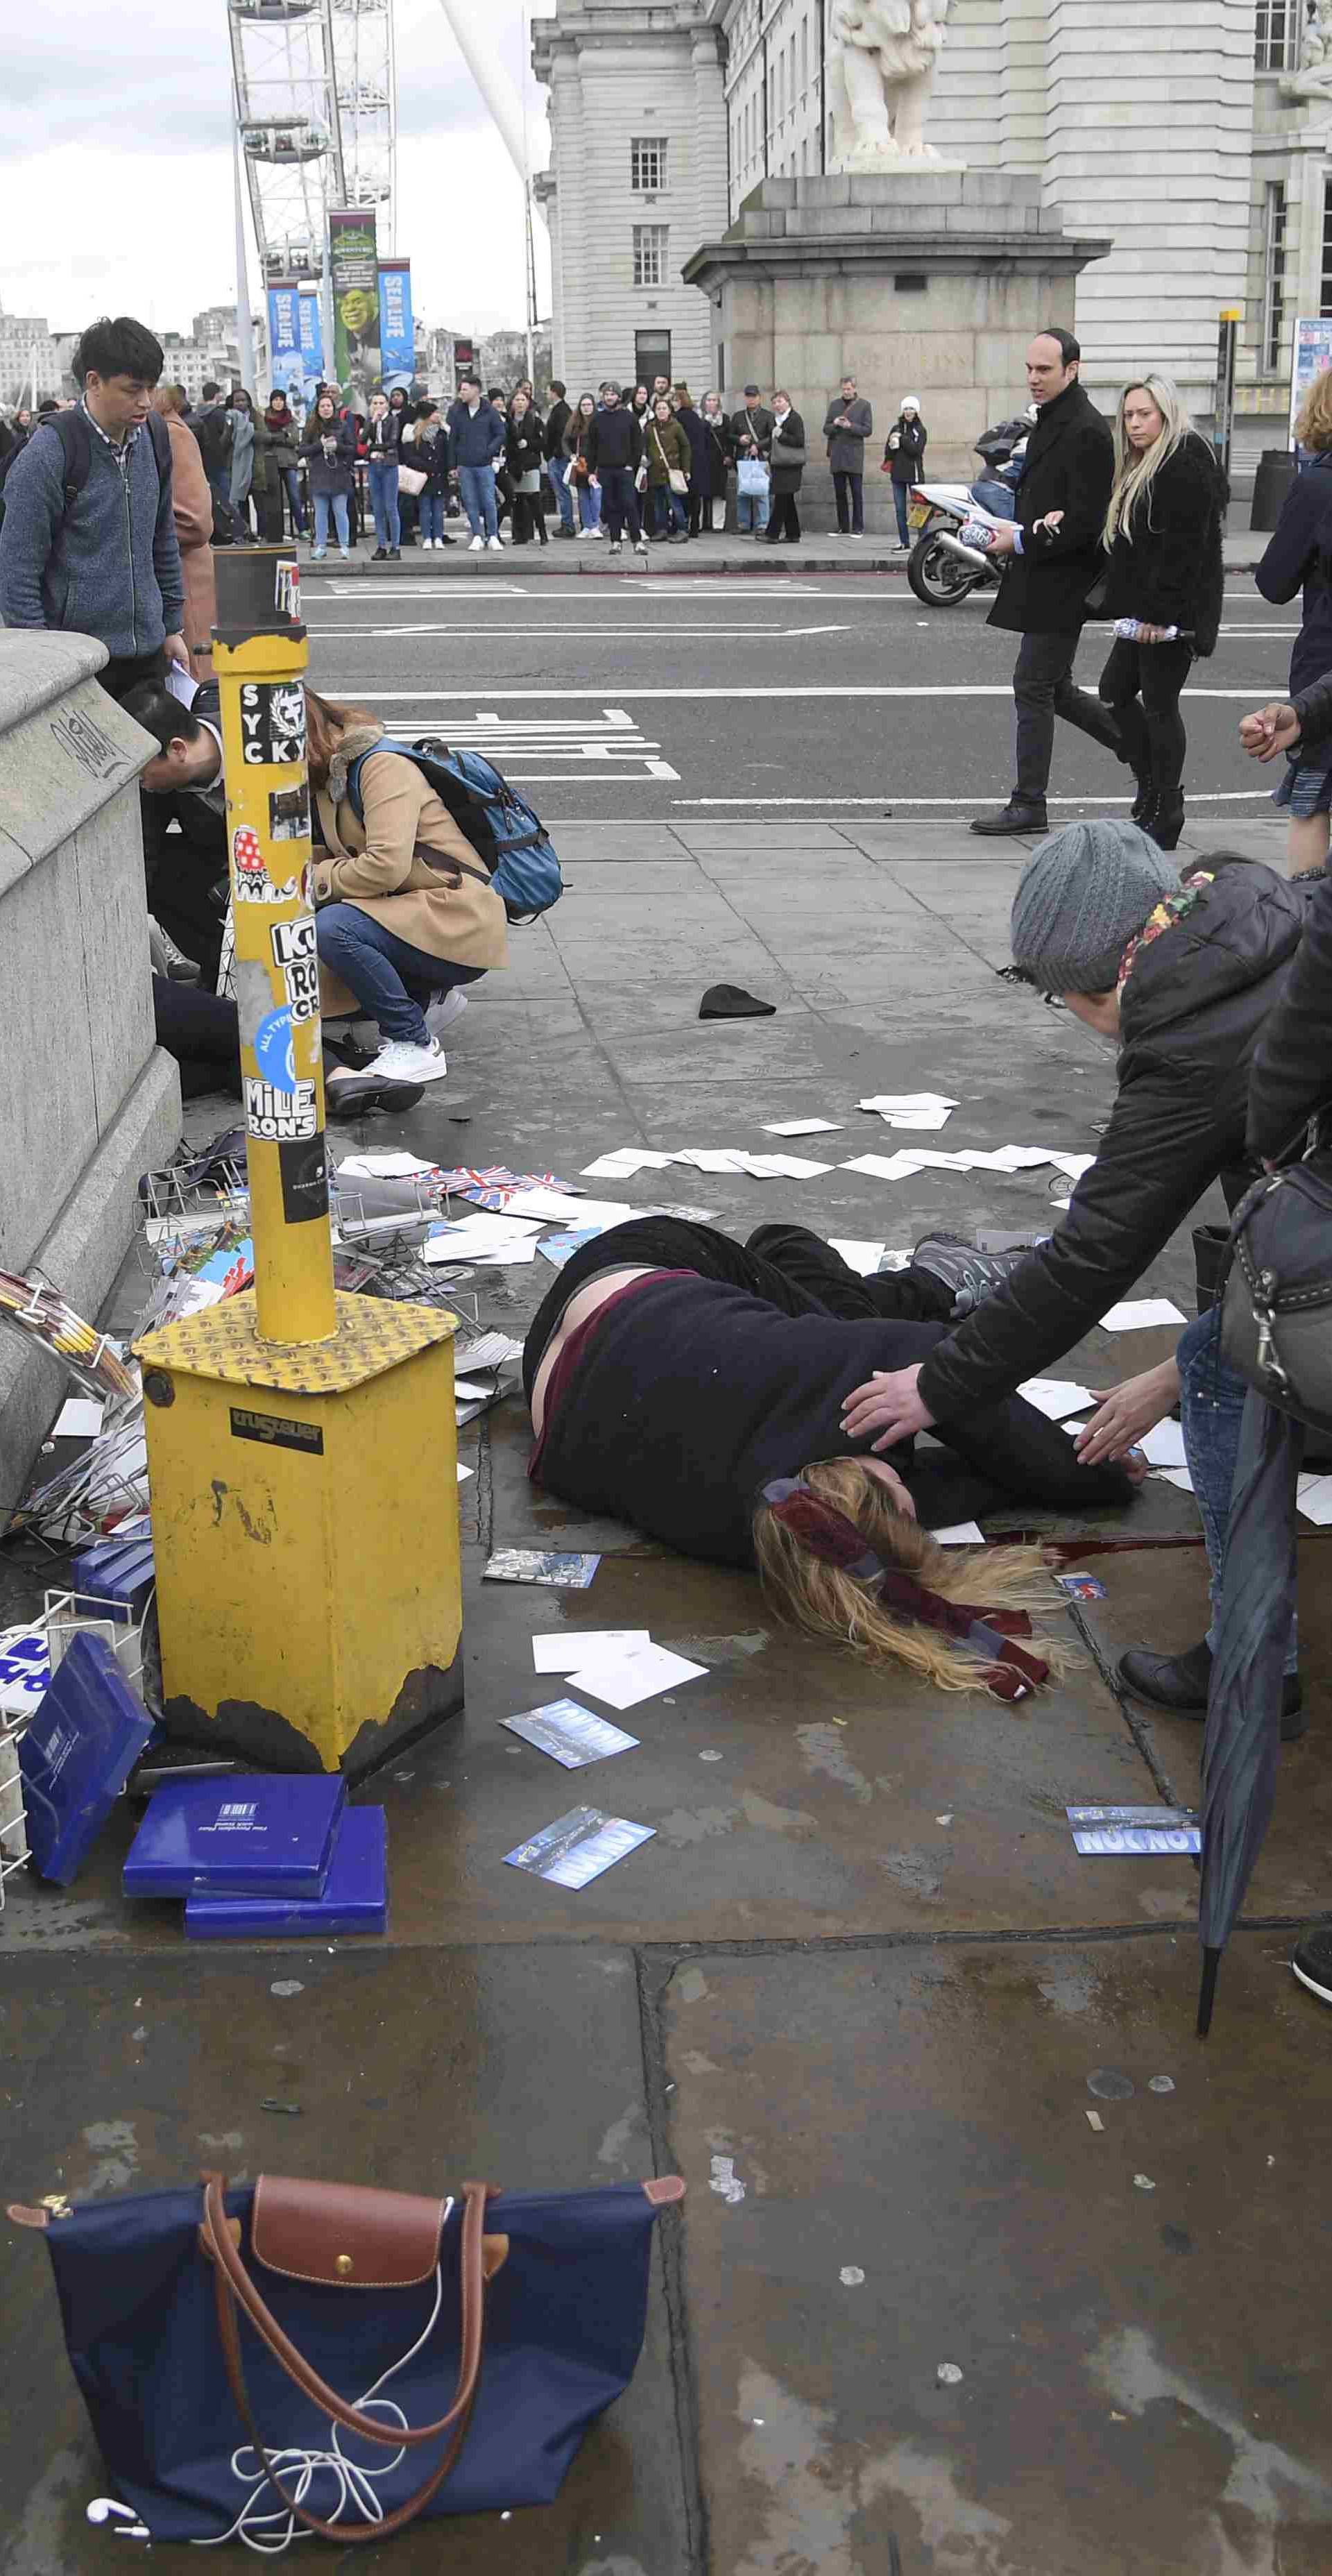 A woman lies injured after a shottingt incident on Westminster Bridge in London